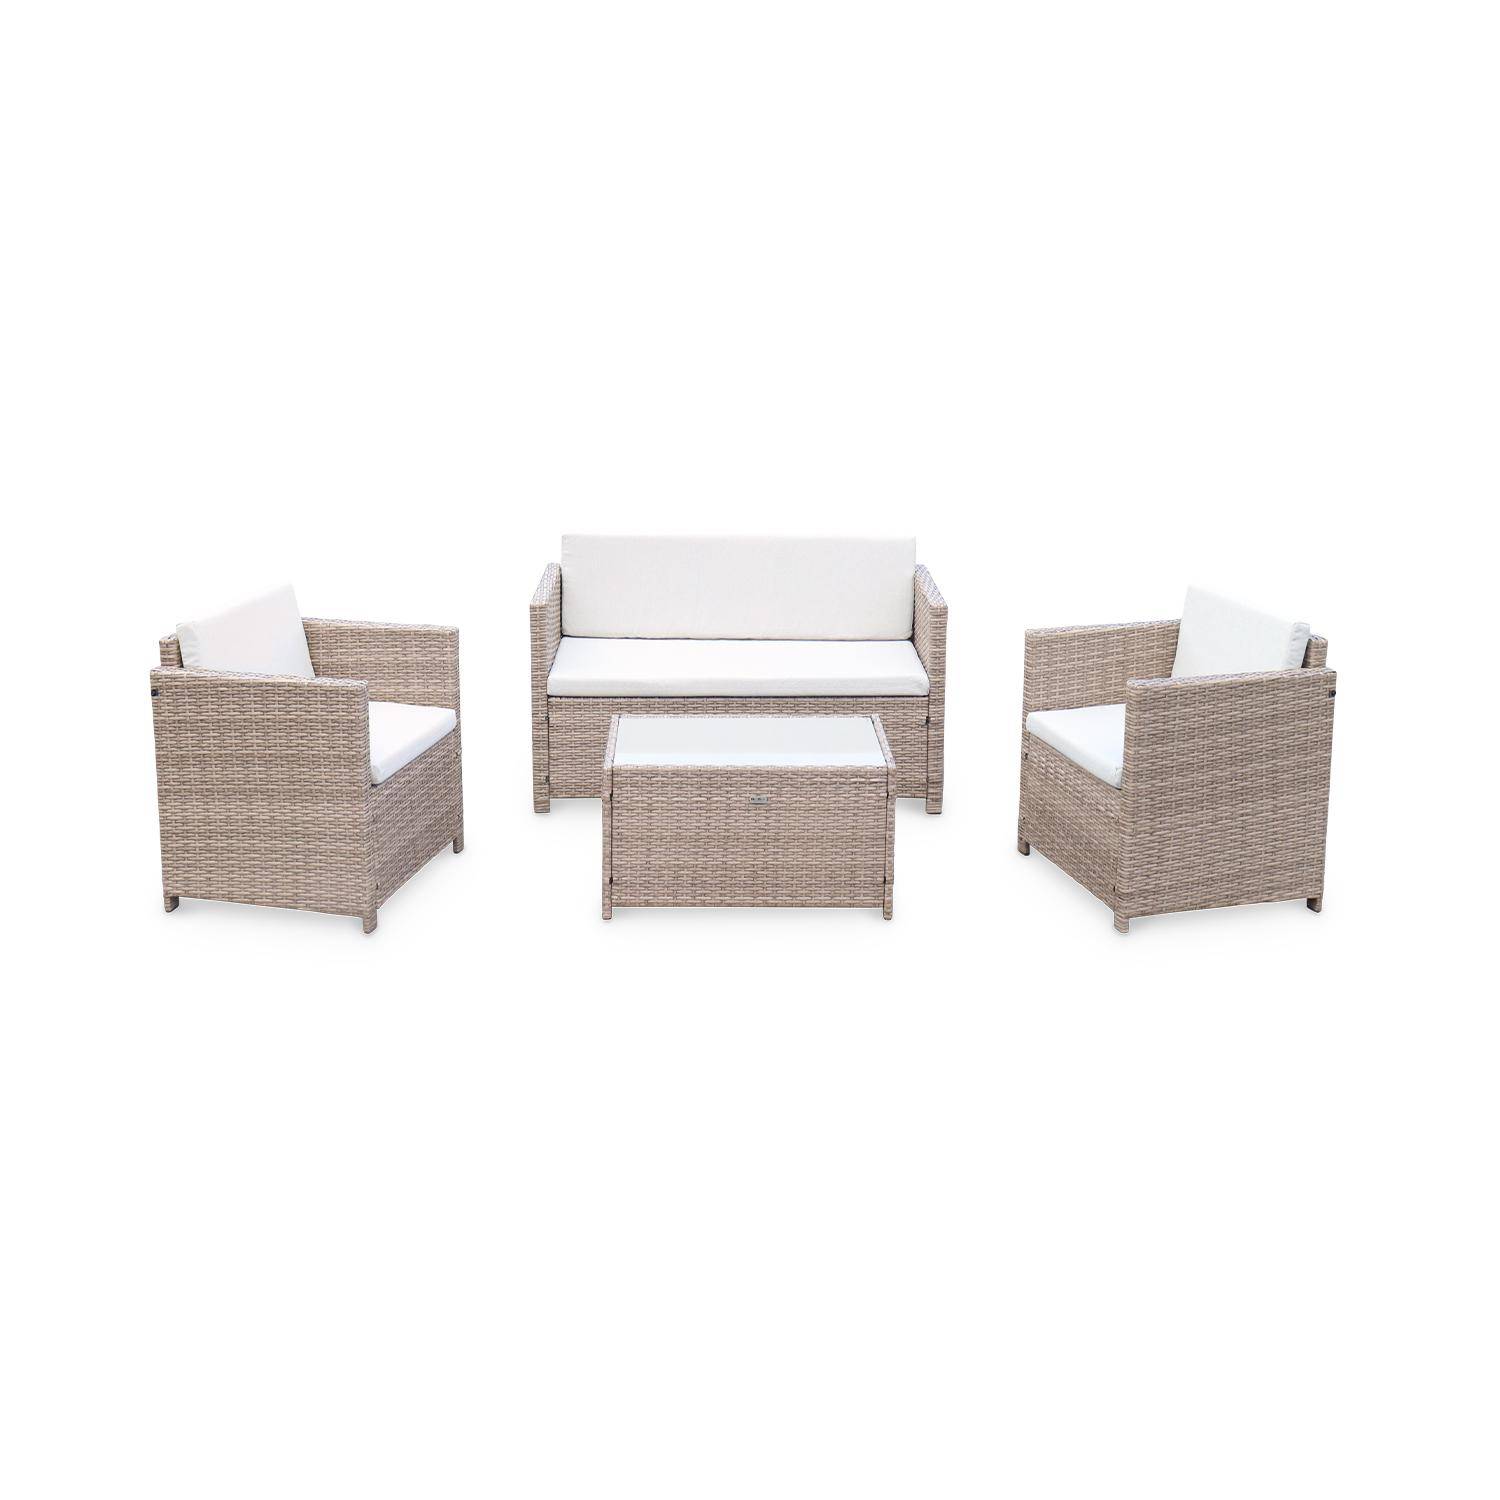 4-seater polyrattan garden sofa set - sofa, 2 armchairs, coffee table - Perugia - Natural Beige rattan, Beige cushions,sweeek,Photo4